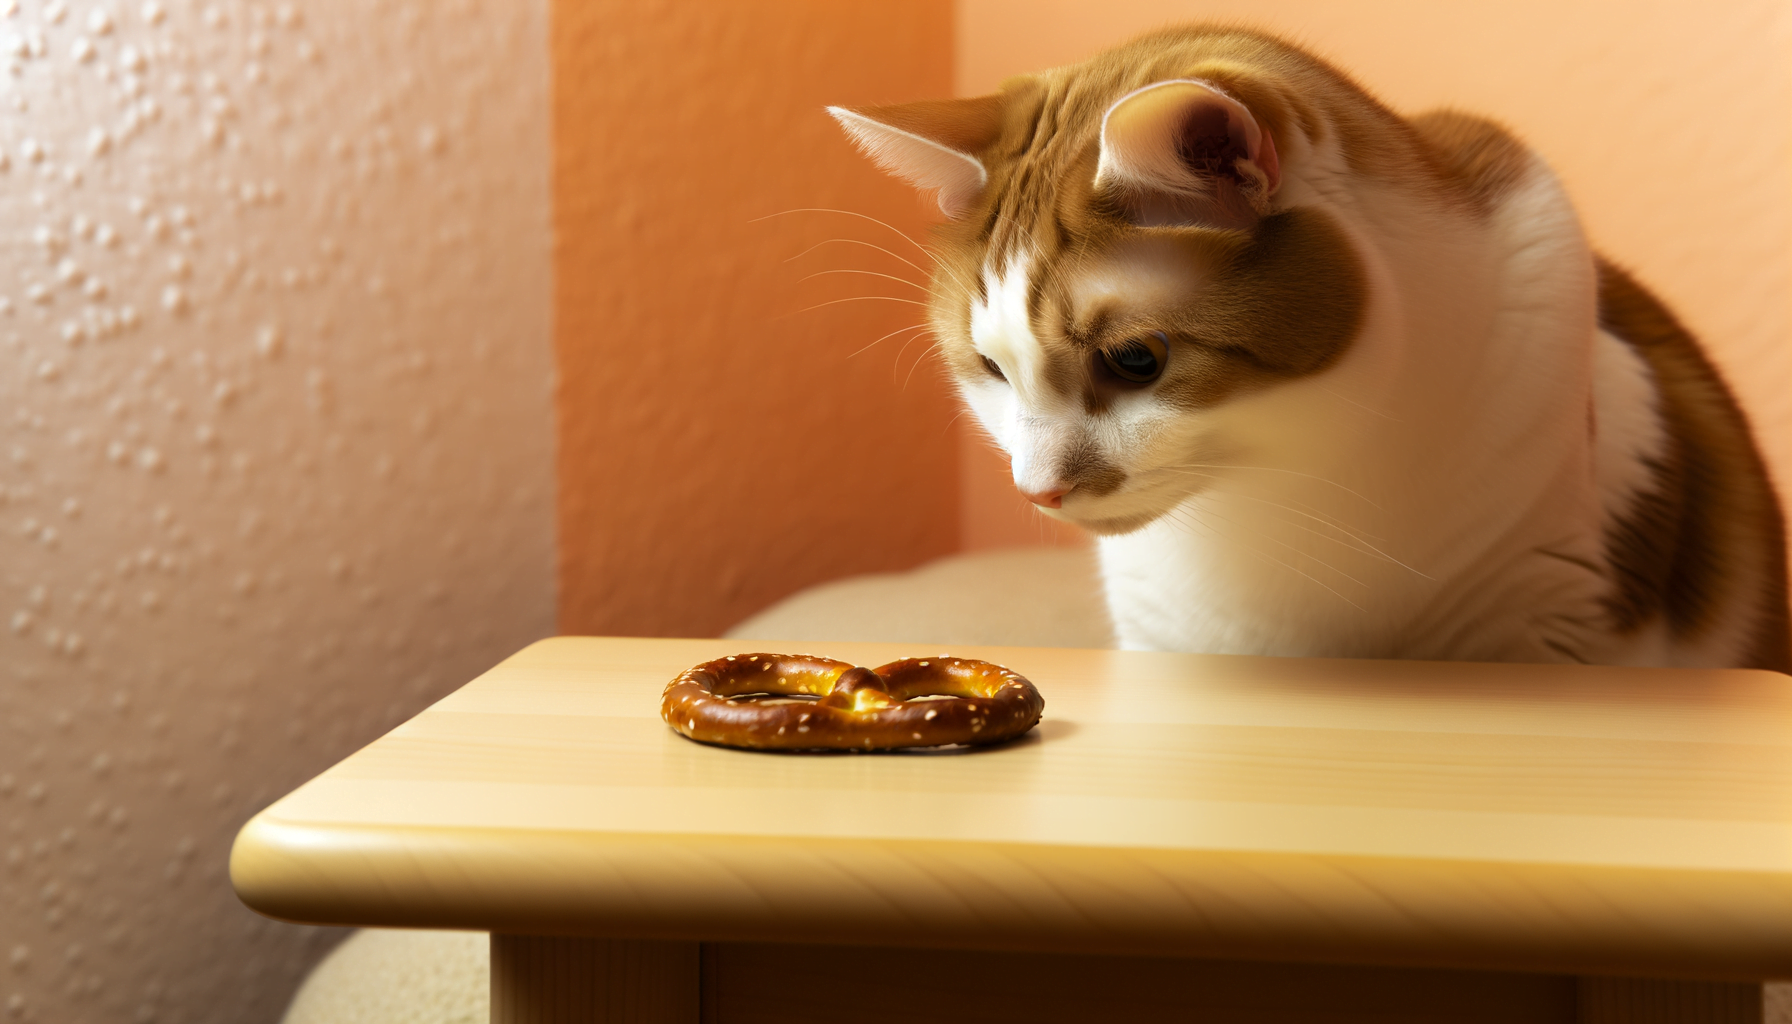 "Decoding Feline Diets: Can Cats Safely Crunch on Pretzels?"